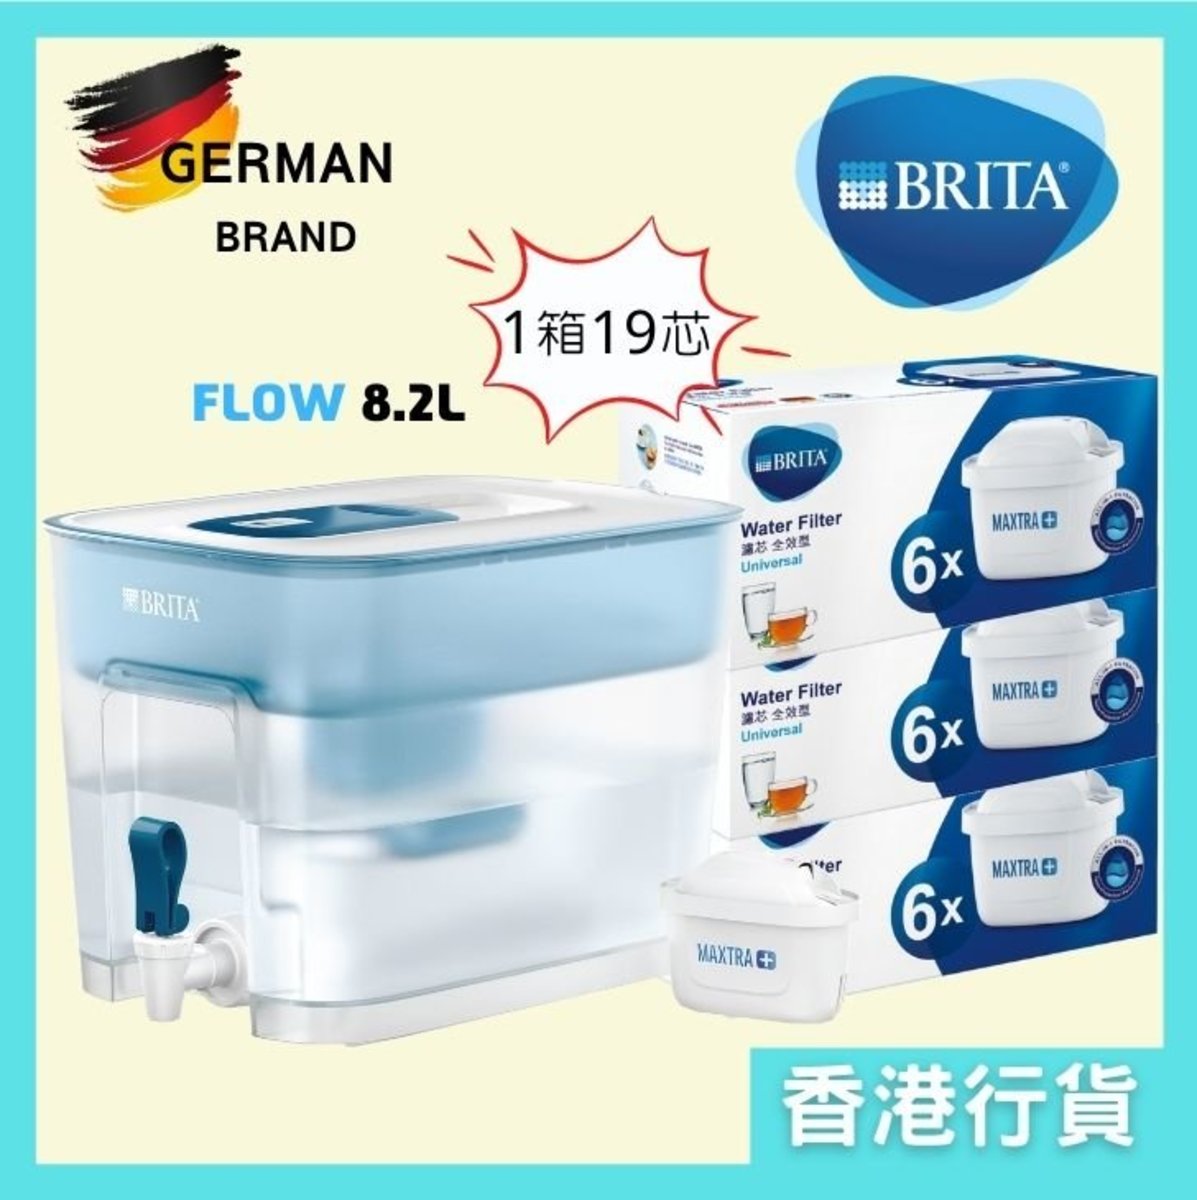 Flow 8.2L water filter jug (incl 1 filter + 18 filters)- blue